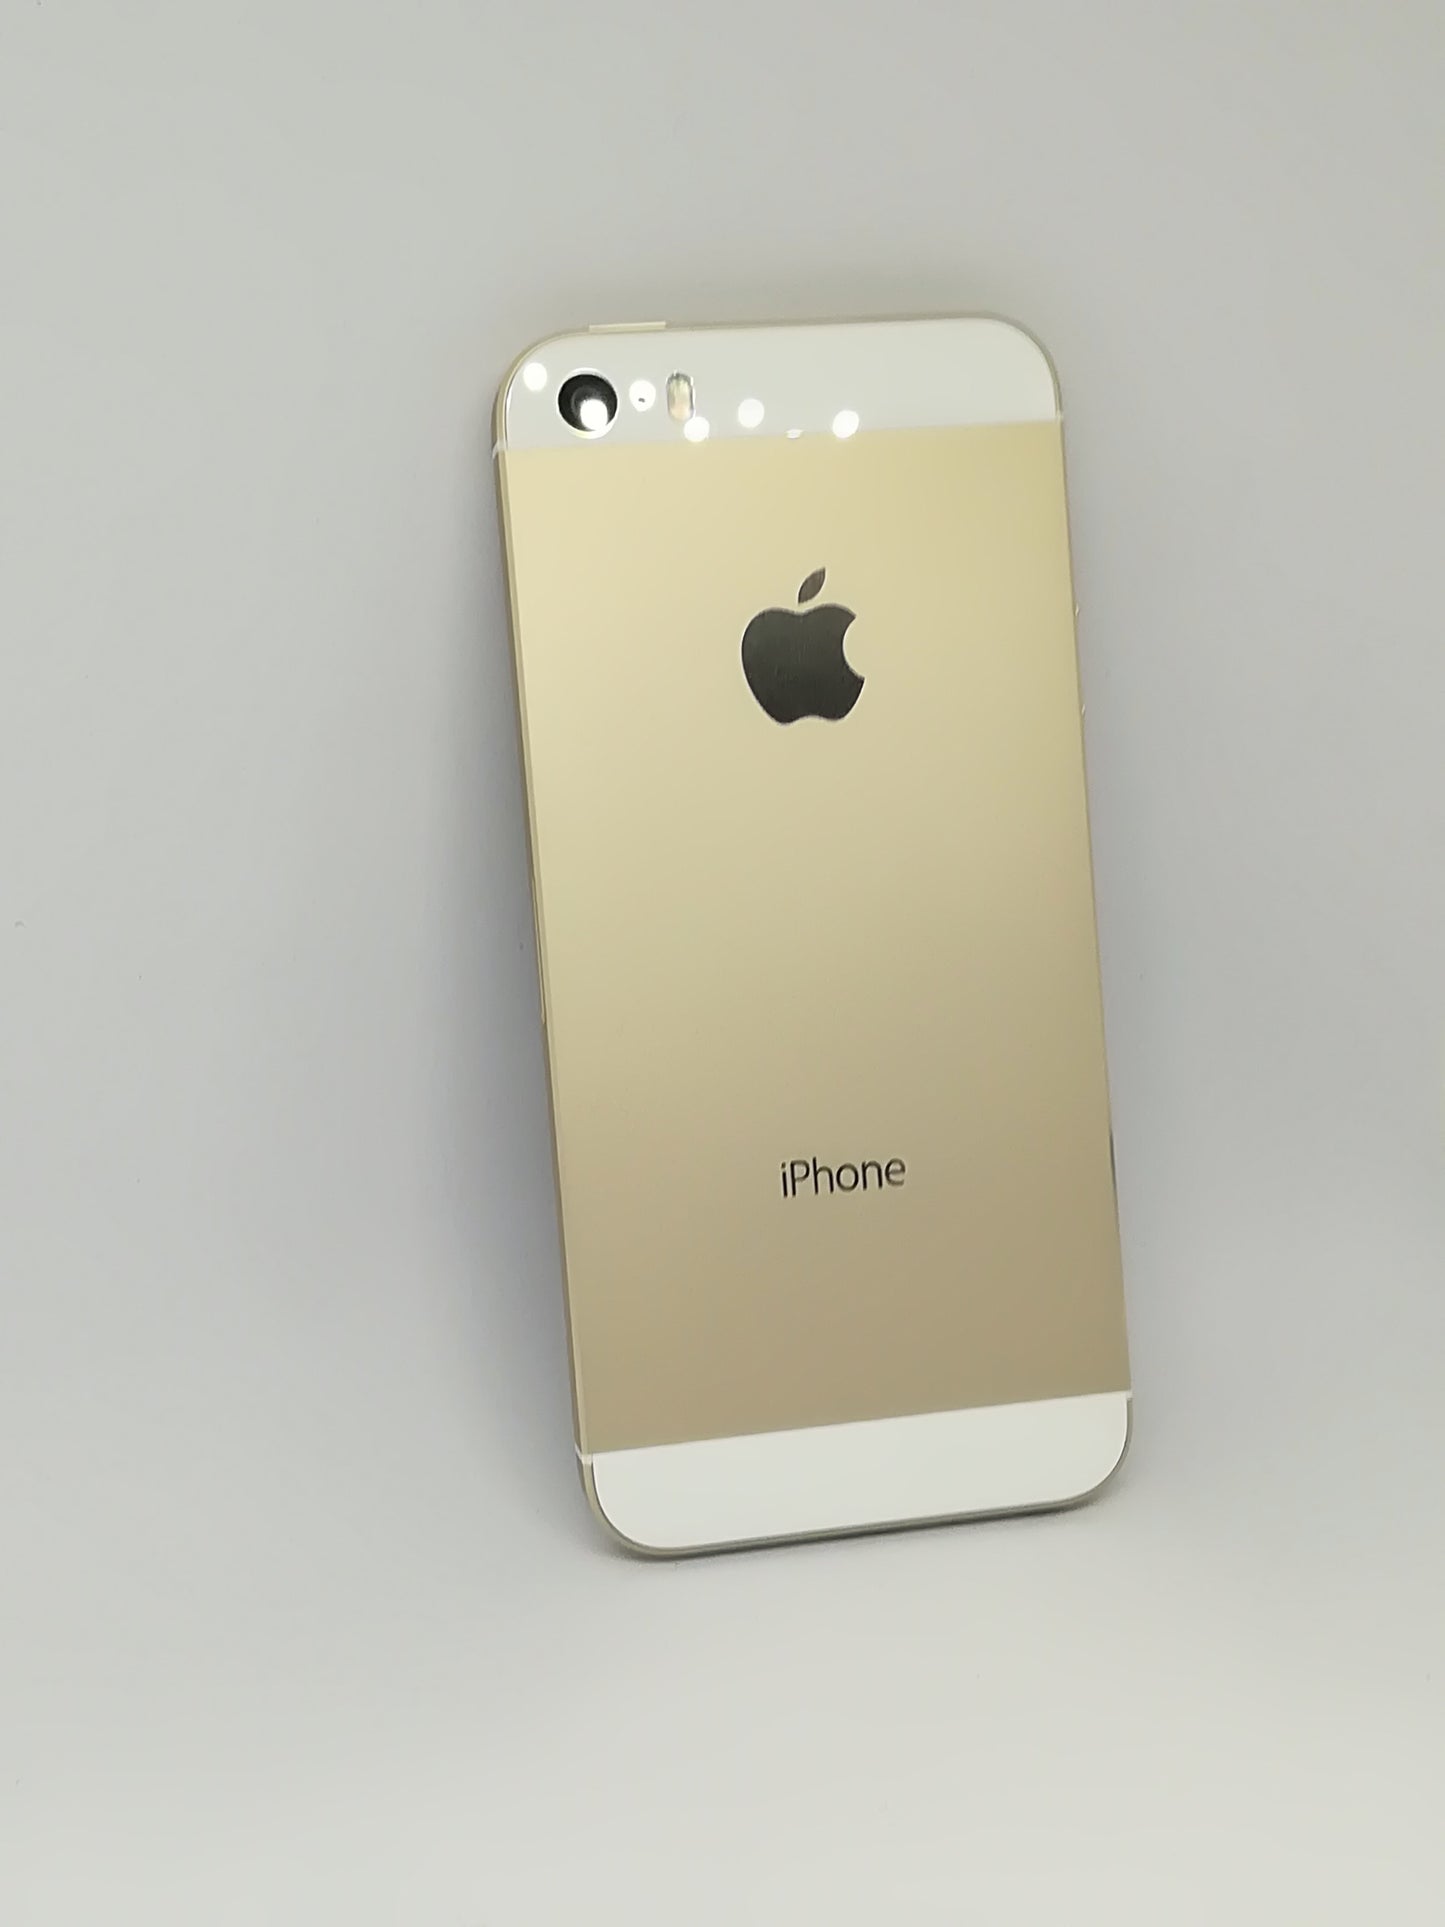 Apple iPhone 5s 16GB Gold Unlocked